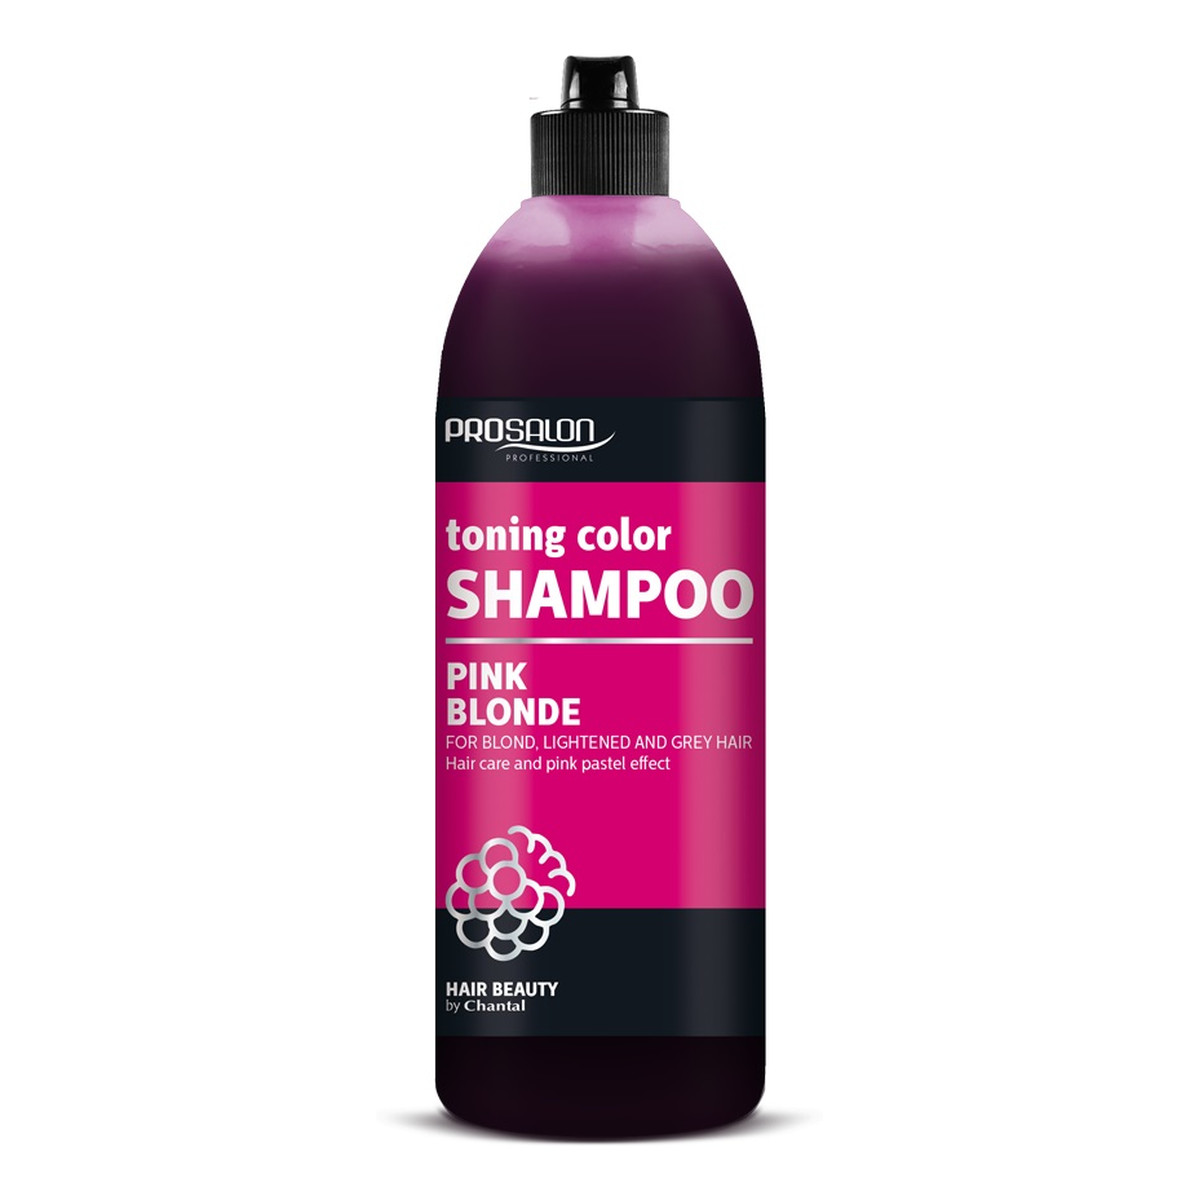 Chantal Profesional Prosalon Toning Color Shampoo Szampon tonujący kolor Pink Blonde 500g